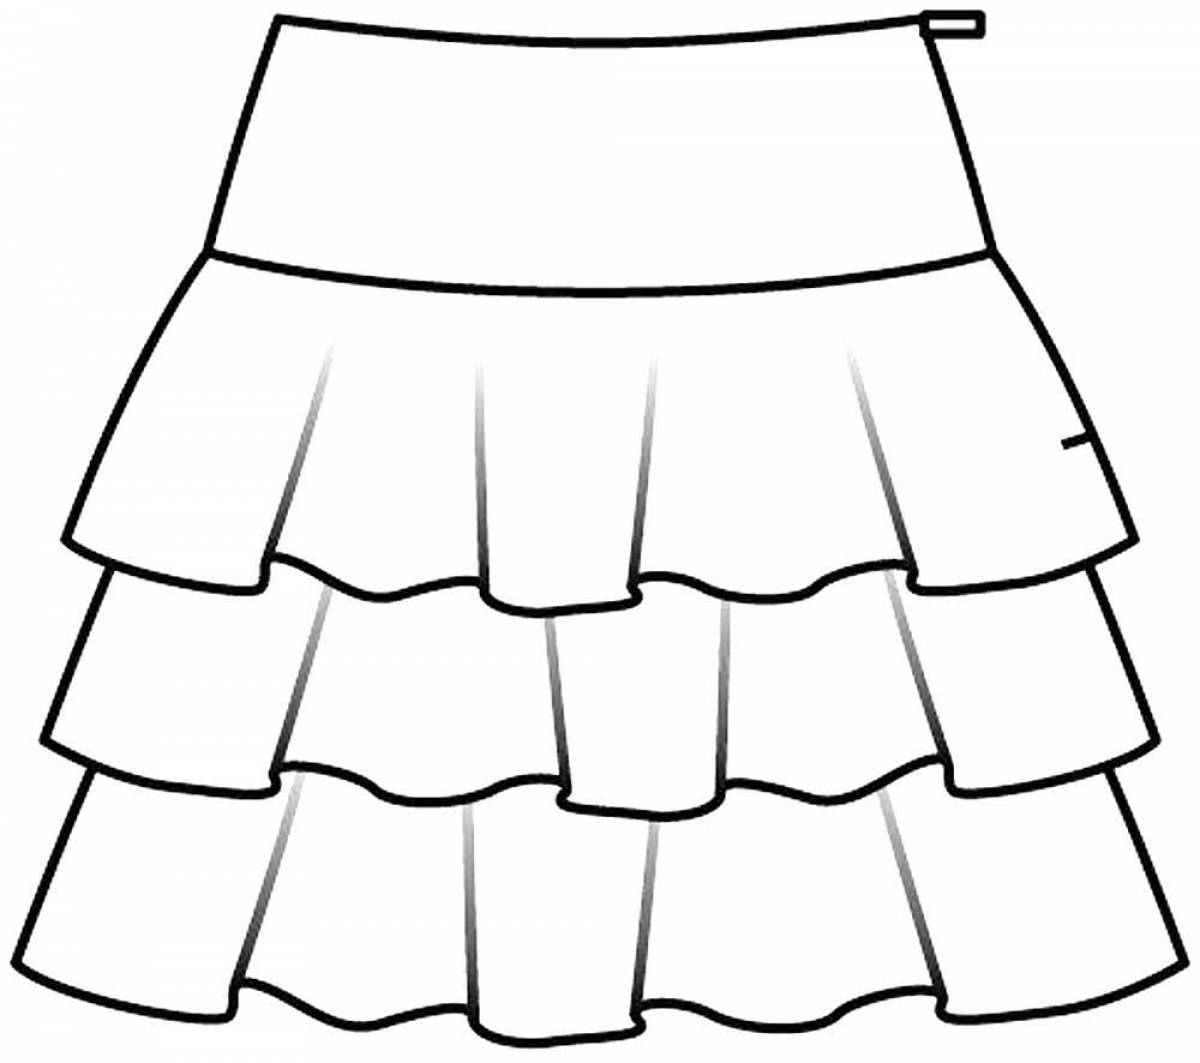 Coloring book shining skirt